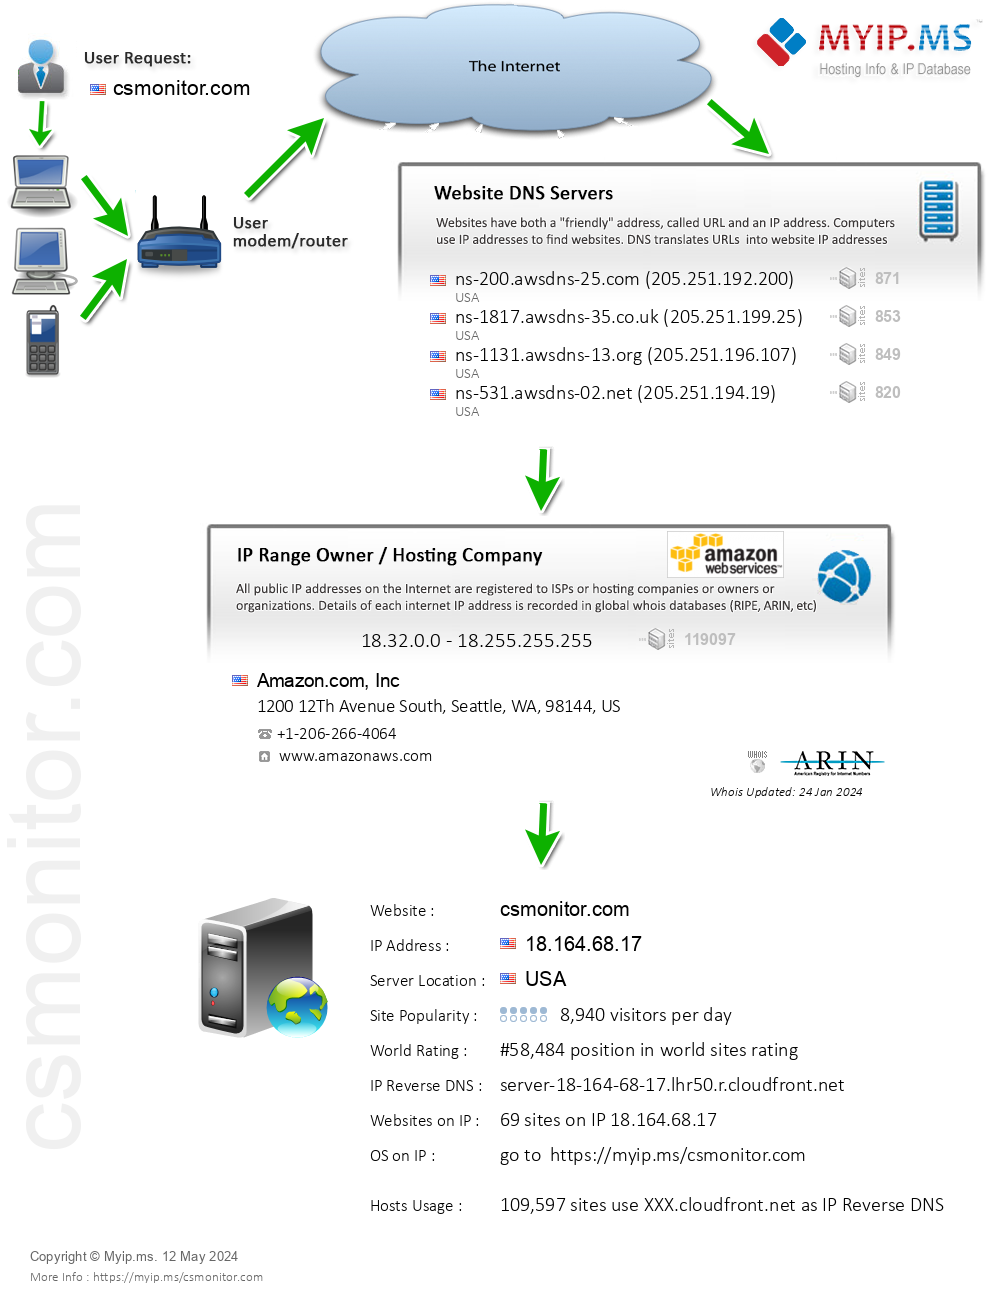 Csmonitor.com - Website Hosting Visual IP Diagram